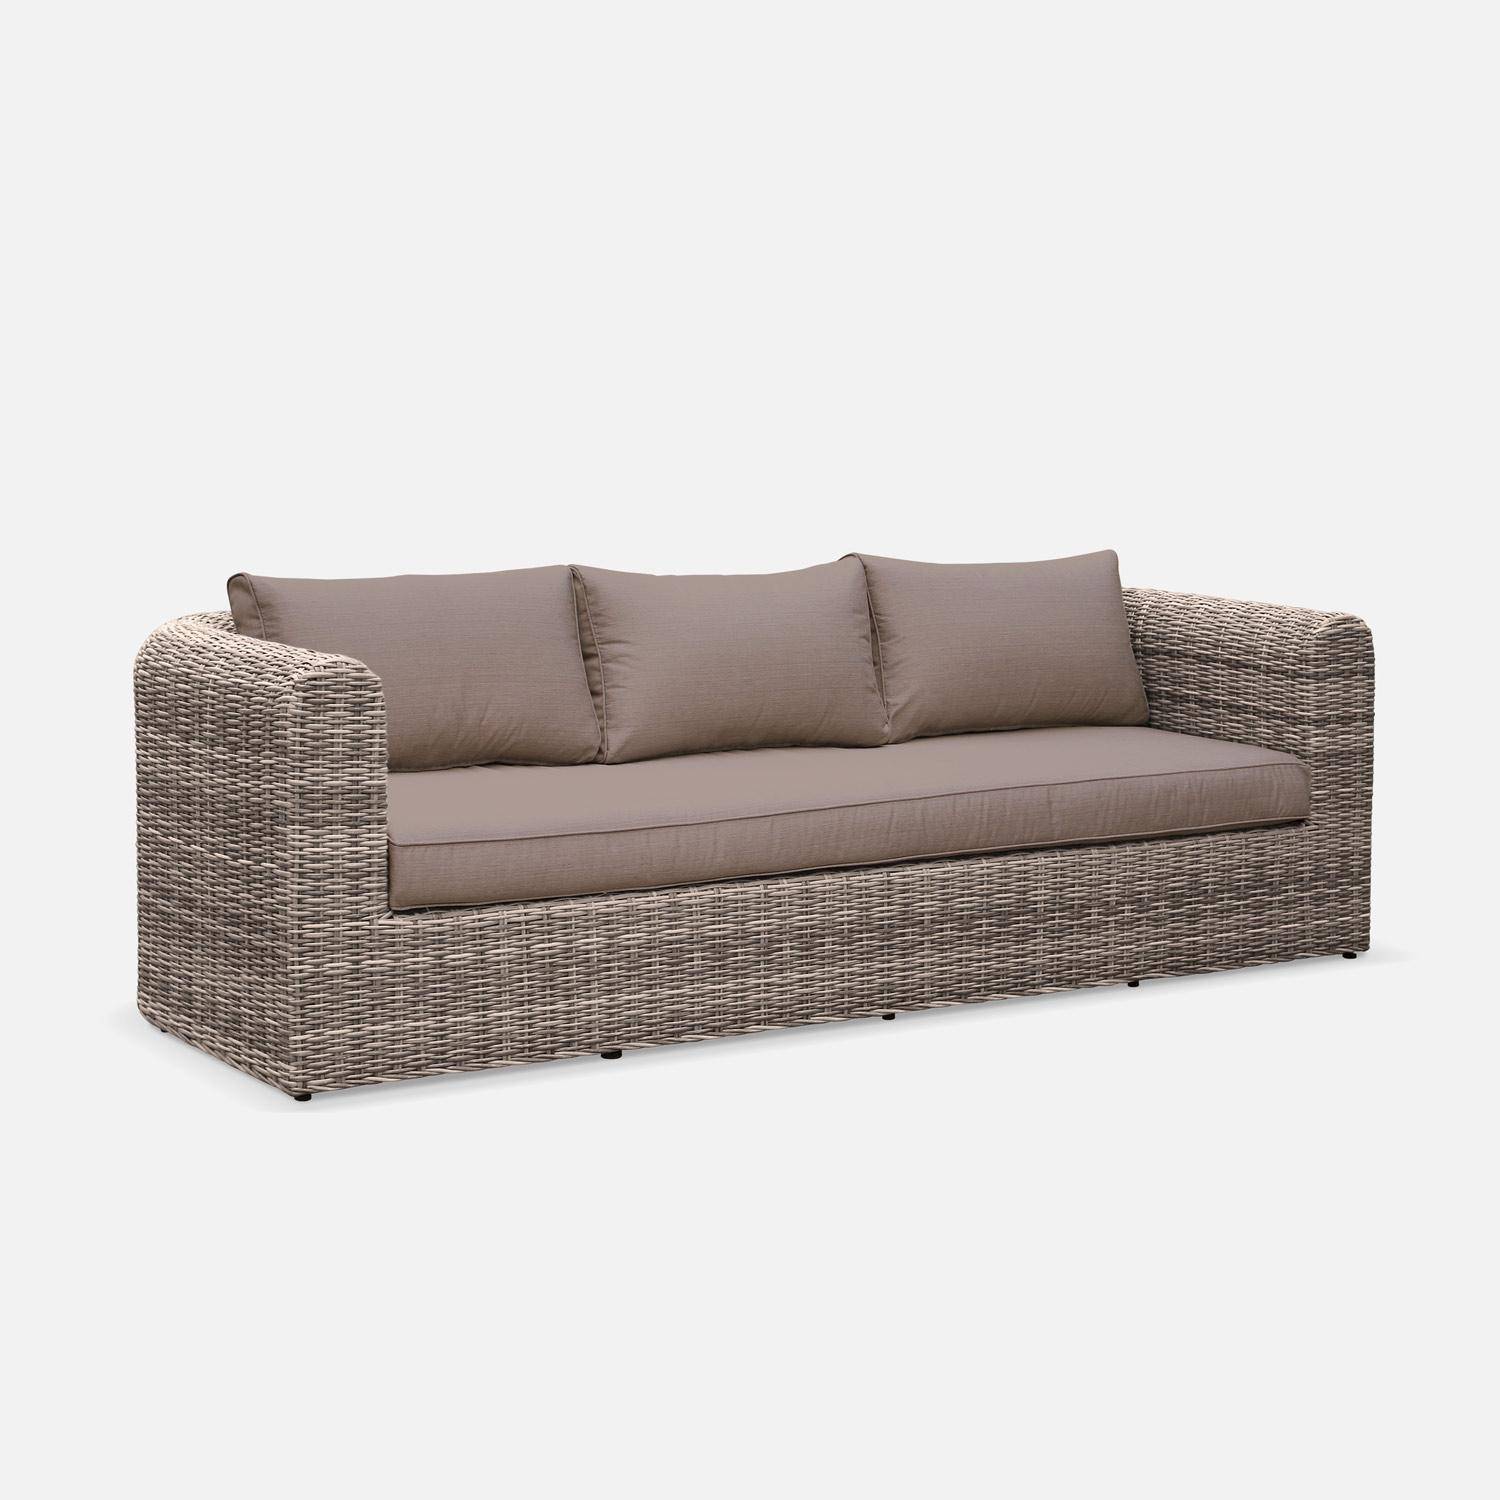 5-seater round rattan garden sofa set - 3-seater sofa, 2 armchairs, 1 coffee table - Juliano - Beige Photo4